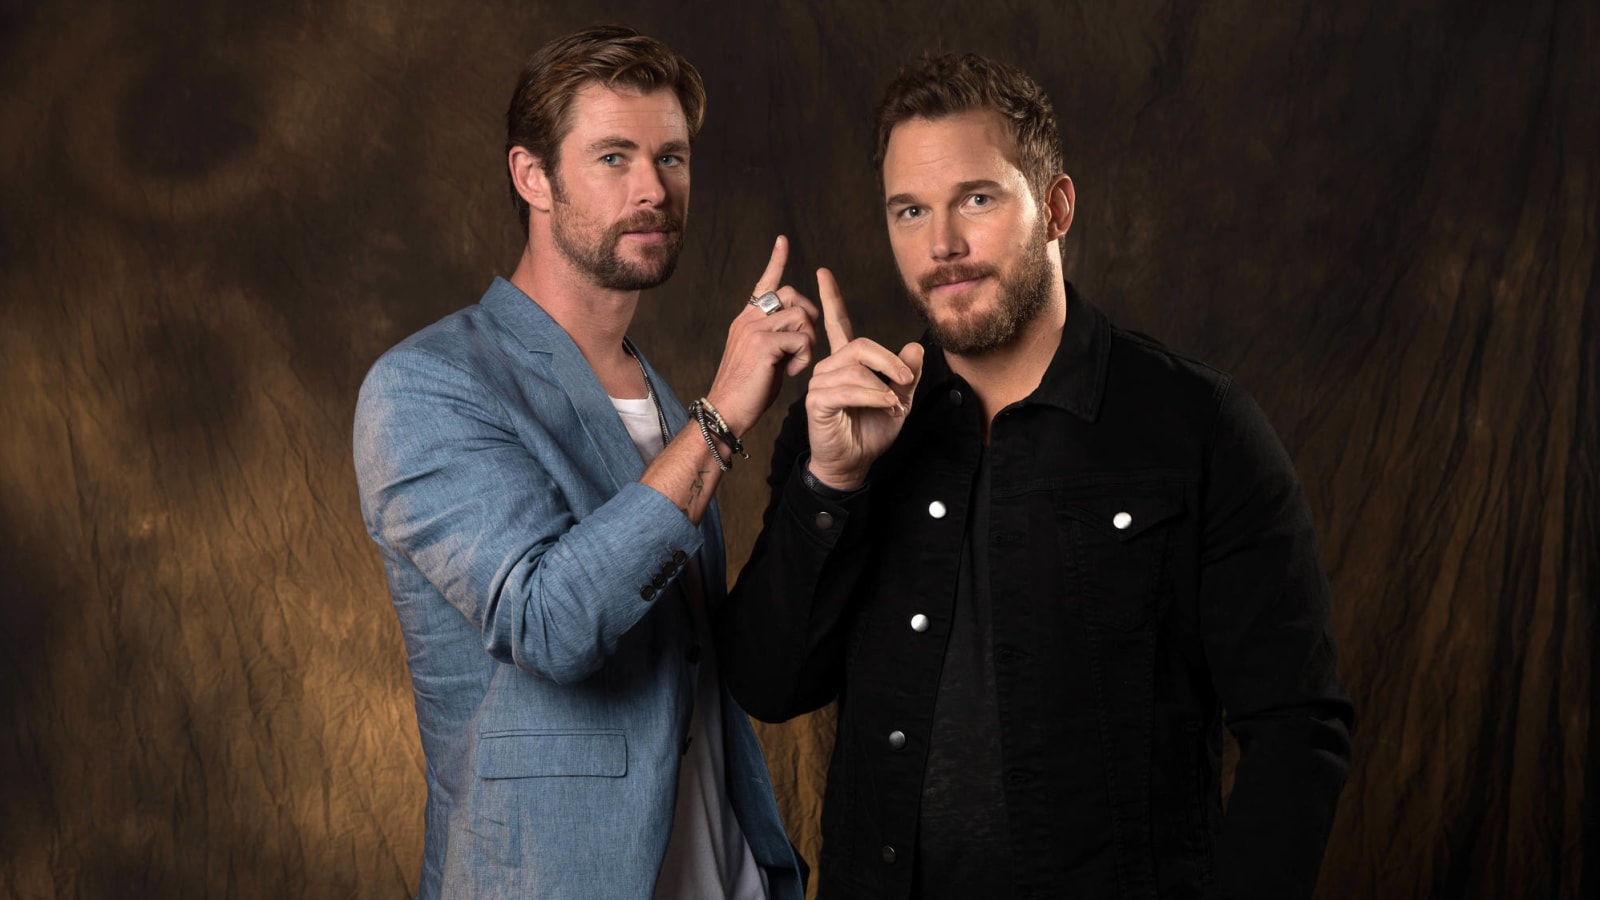 Chris Hemsworth dishes on co-star Chris Pratt: 'The guy is wildly impressive'